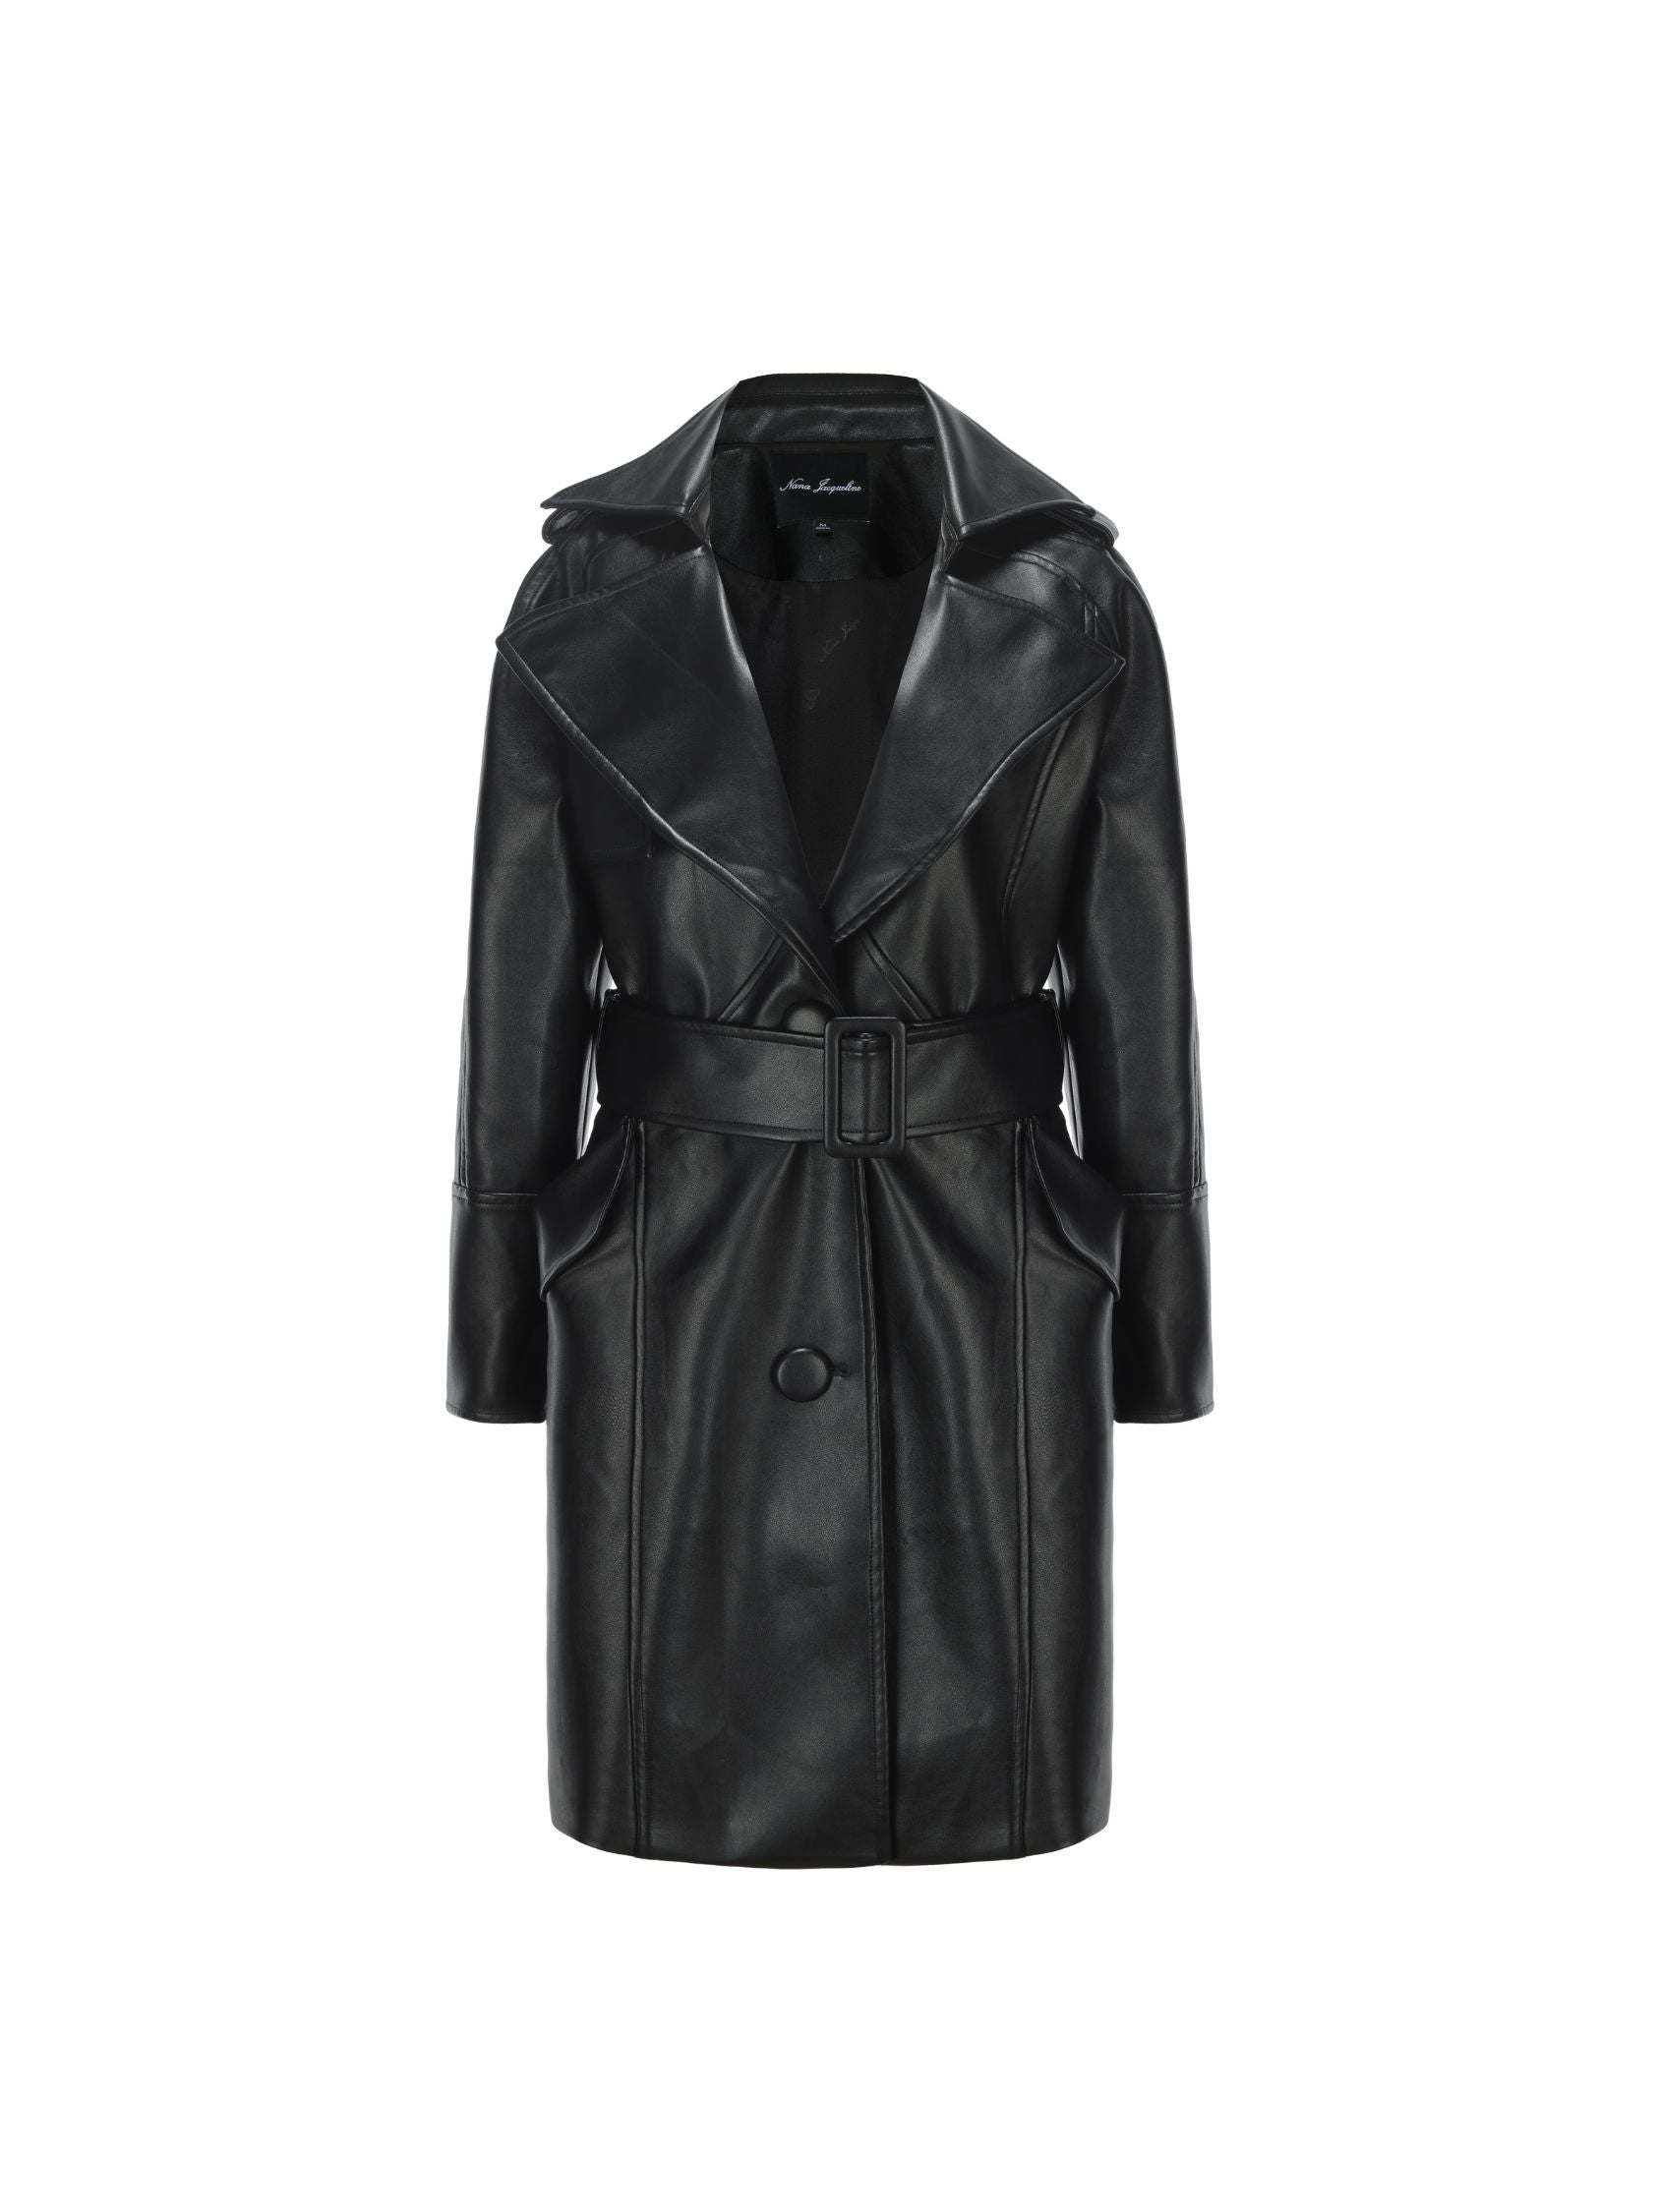 Keira Leather Trench Coat (Black) (Final Sale) – Nana Jacqueline